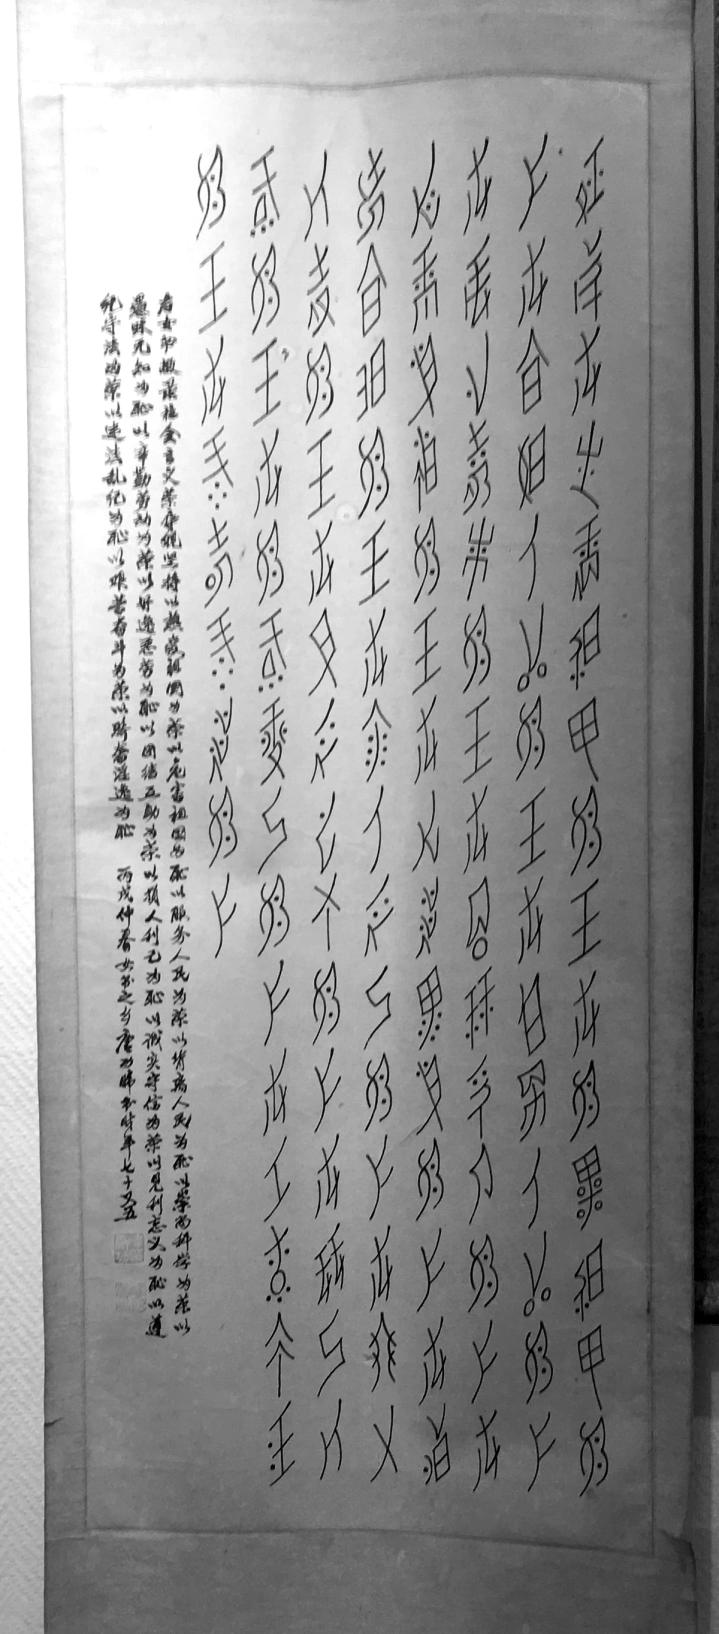 Calligraphy scrool with Nüshu characters